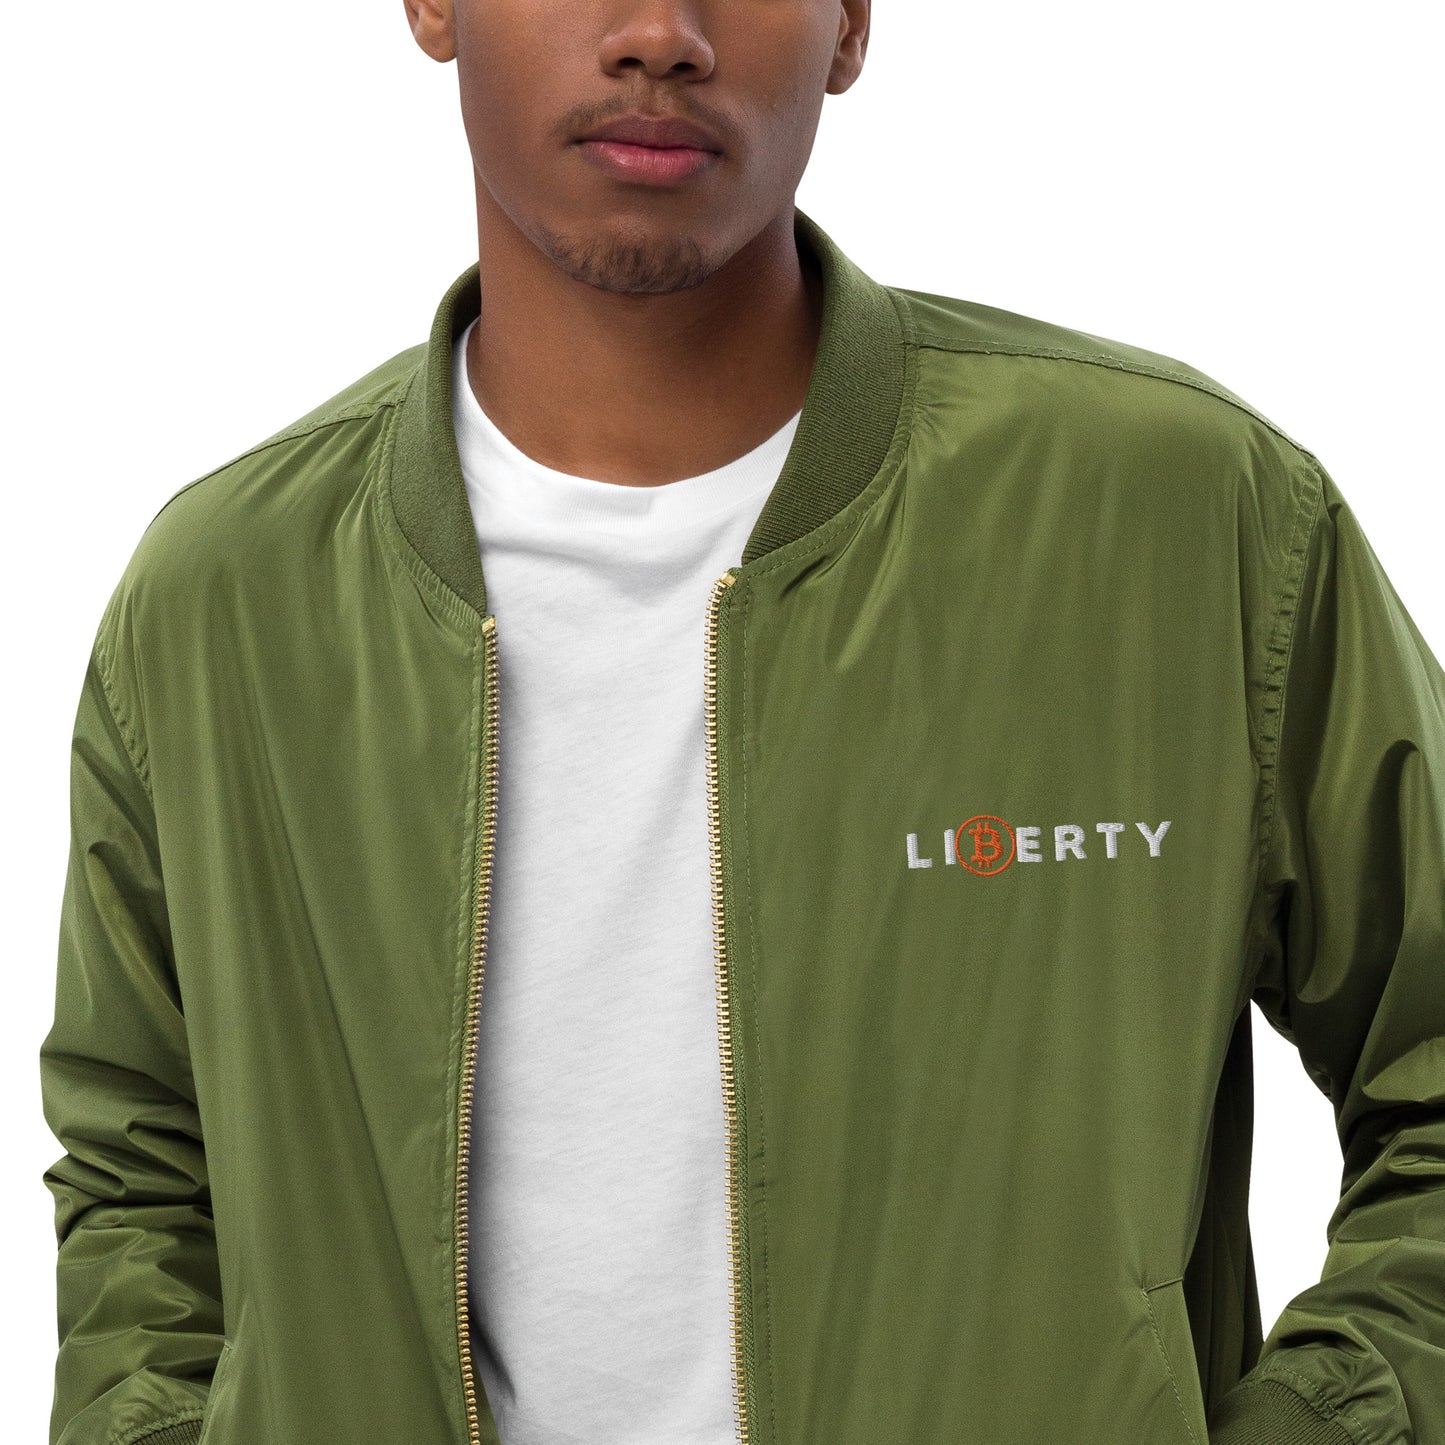 Liberty Premium recycled bomber jacket